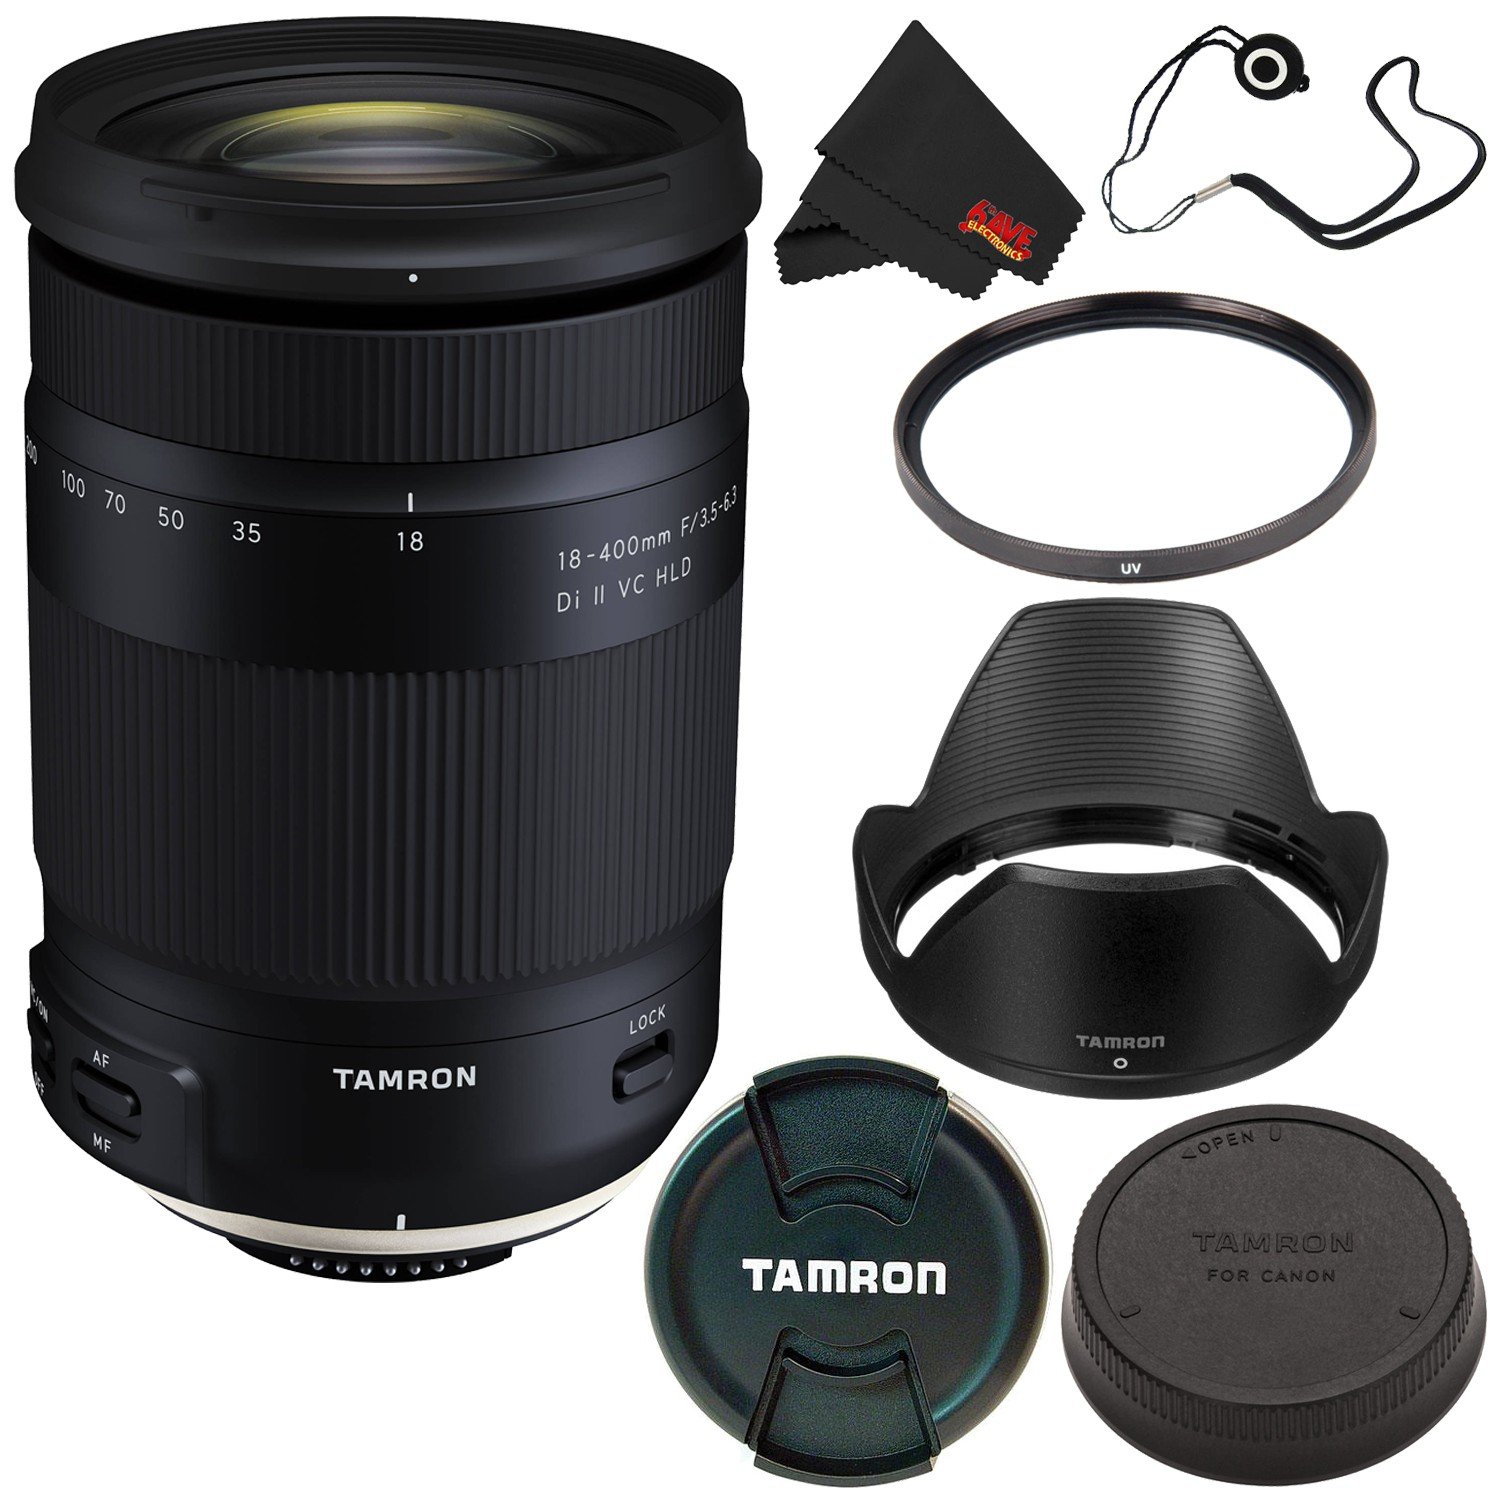 Tamron 18-400mm f/3.5-6.3 Di II VC HLD Lens Canon EF (International Model) + 72mm UV Filter + Lens Cap Keeper + Microfiber Cloth Bundle